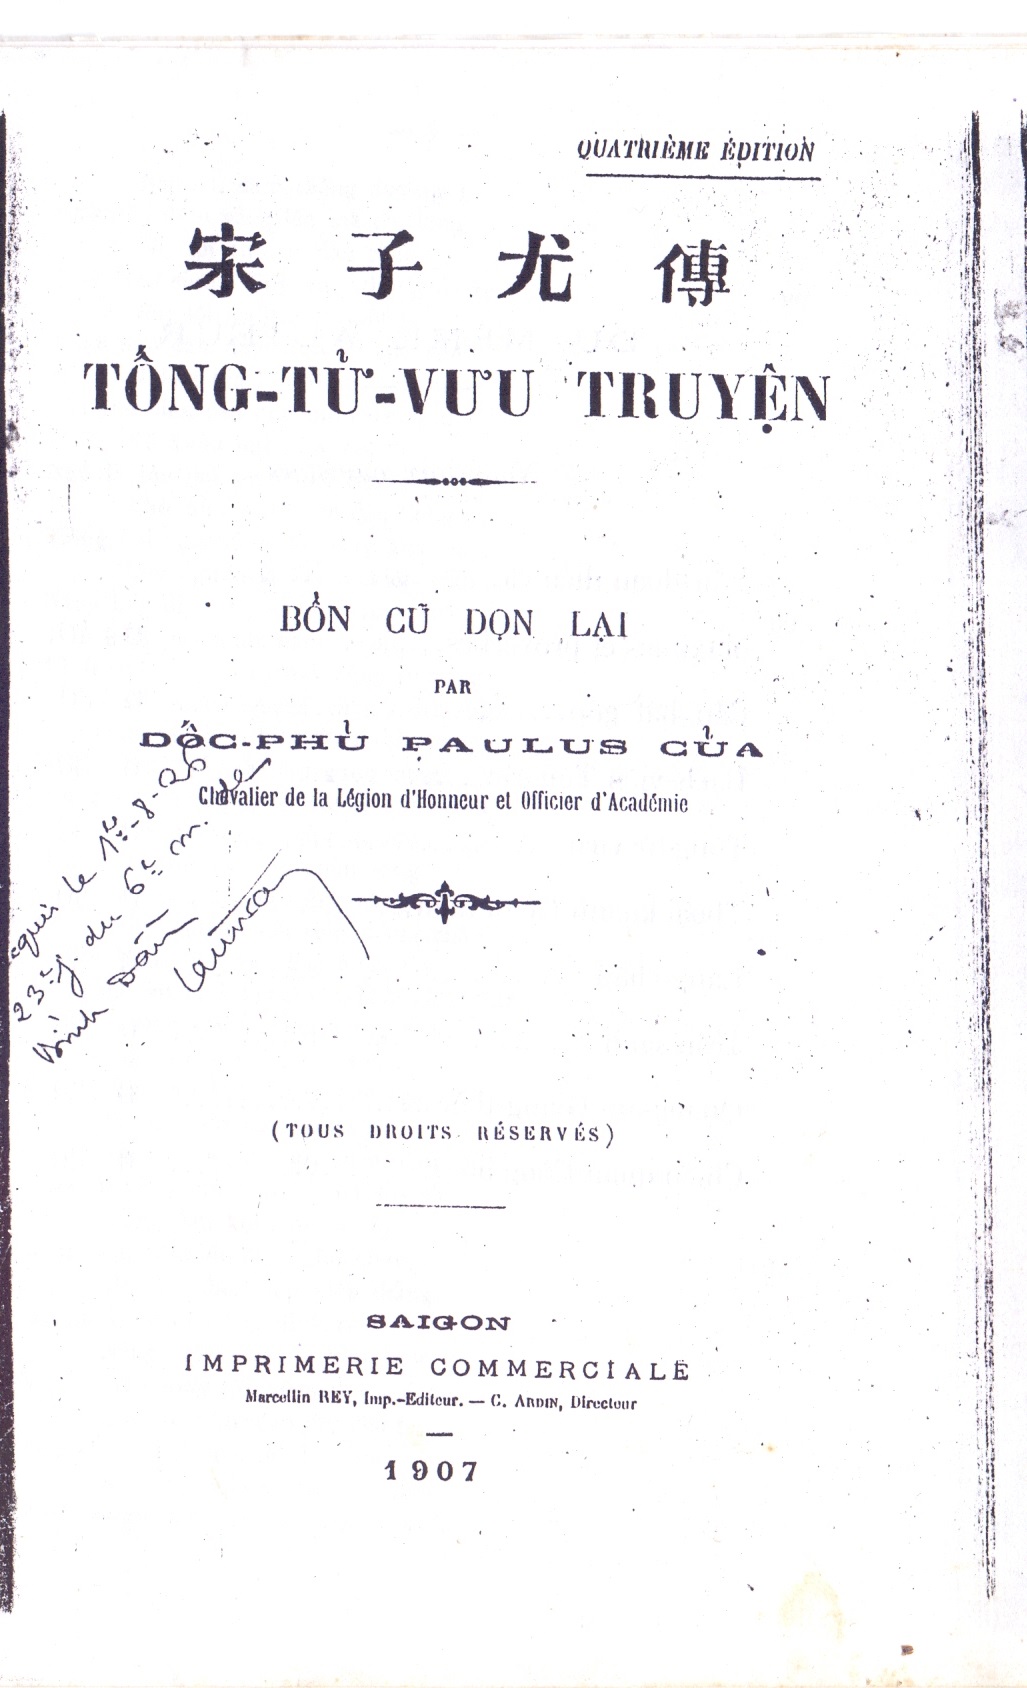 20171202 Tongtuvuu